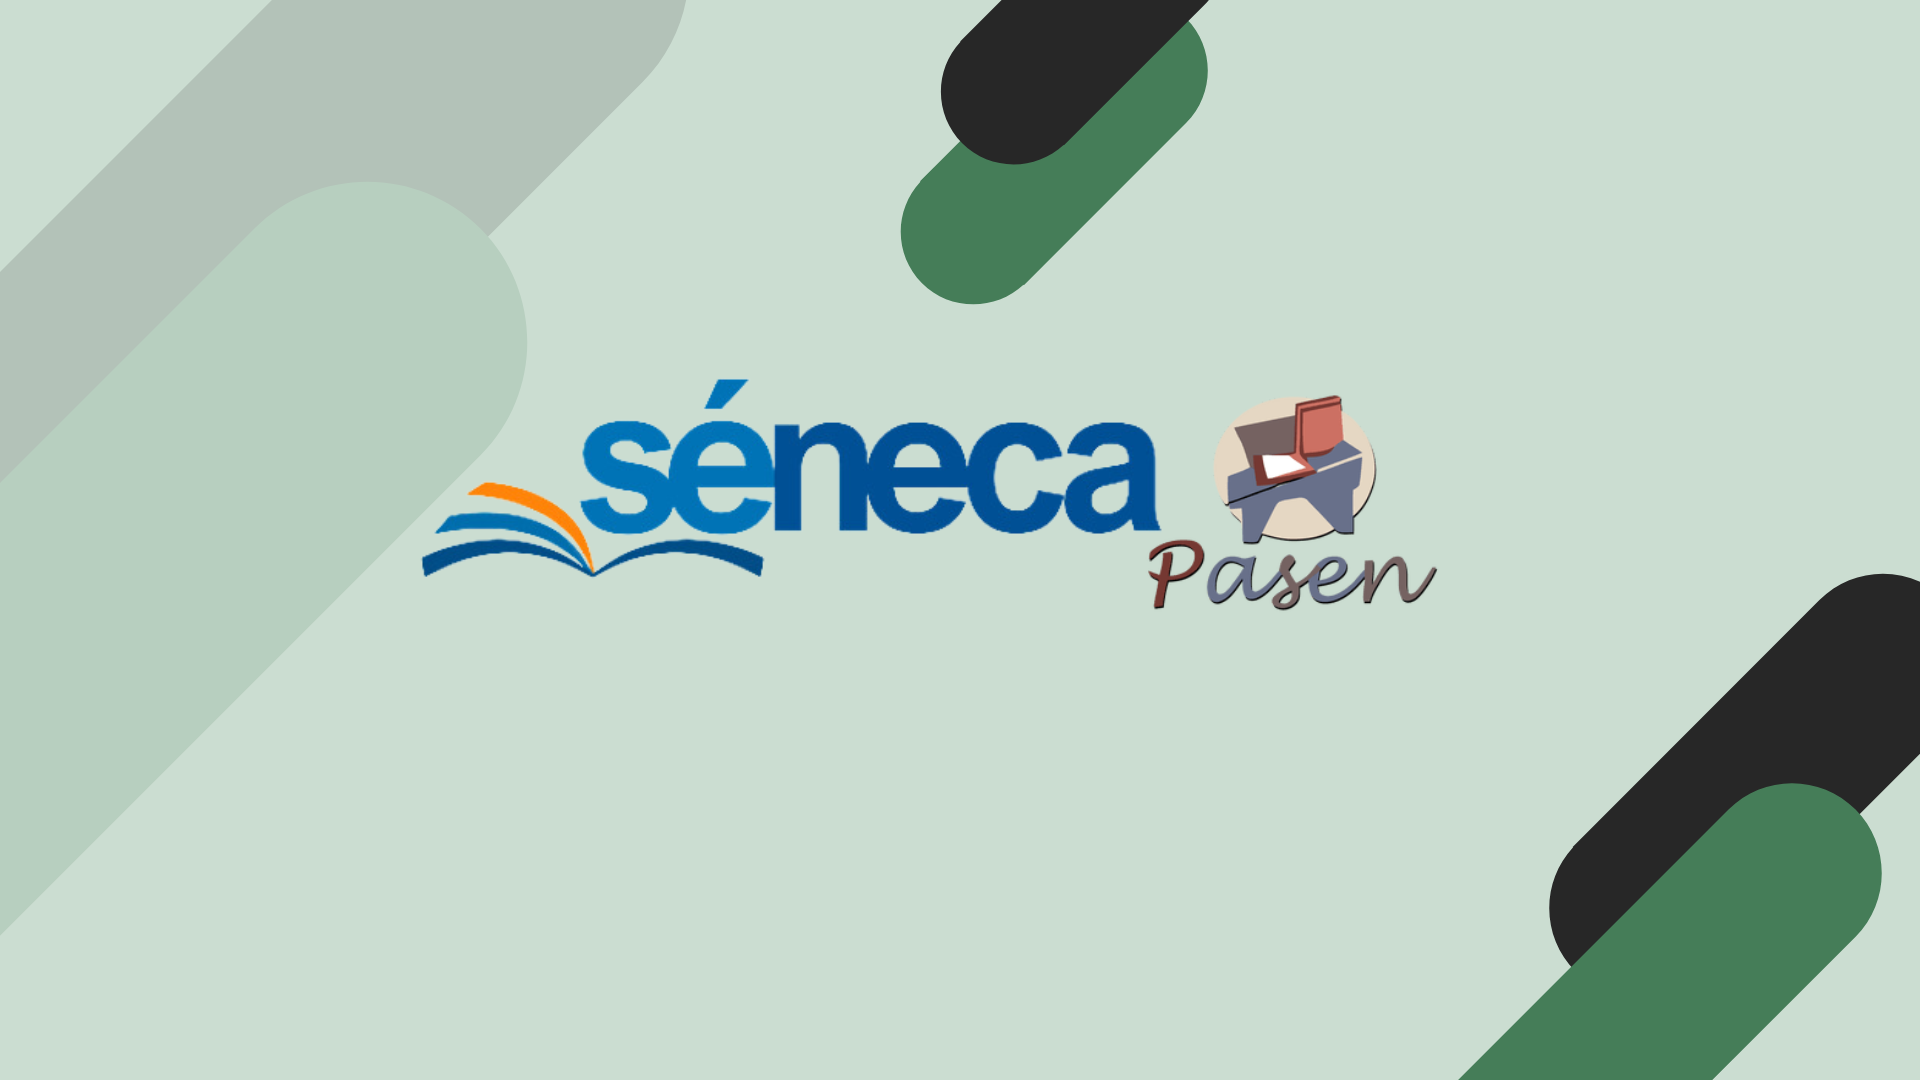 Seneca Pasen